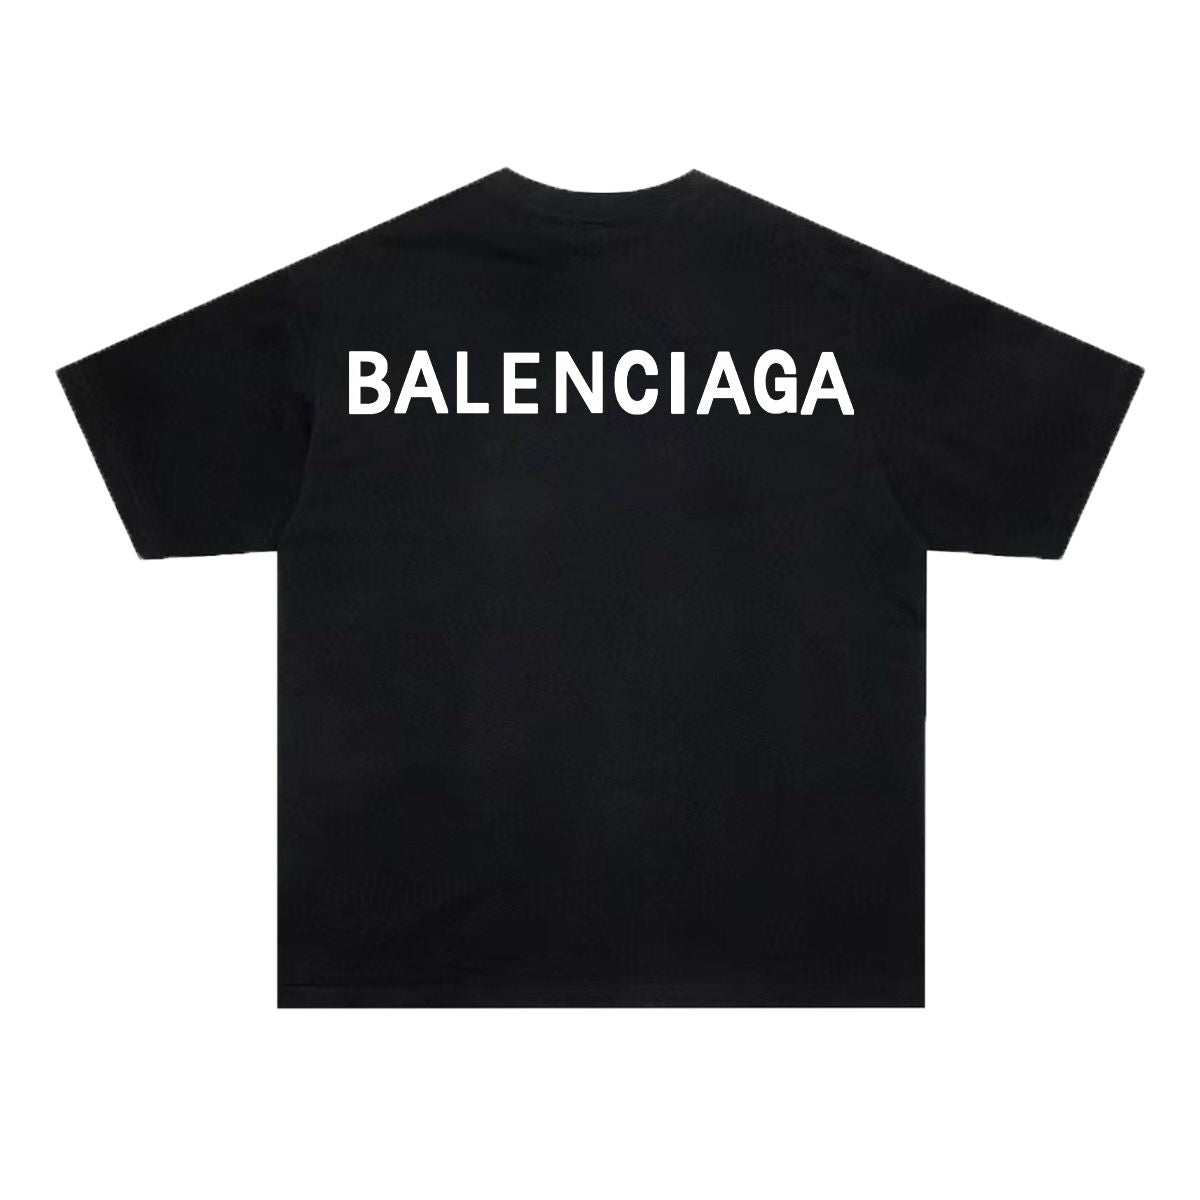 Balenciaga T-Shirt 44